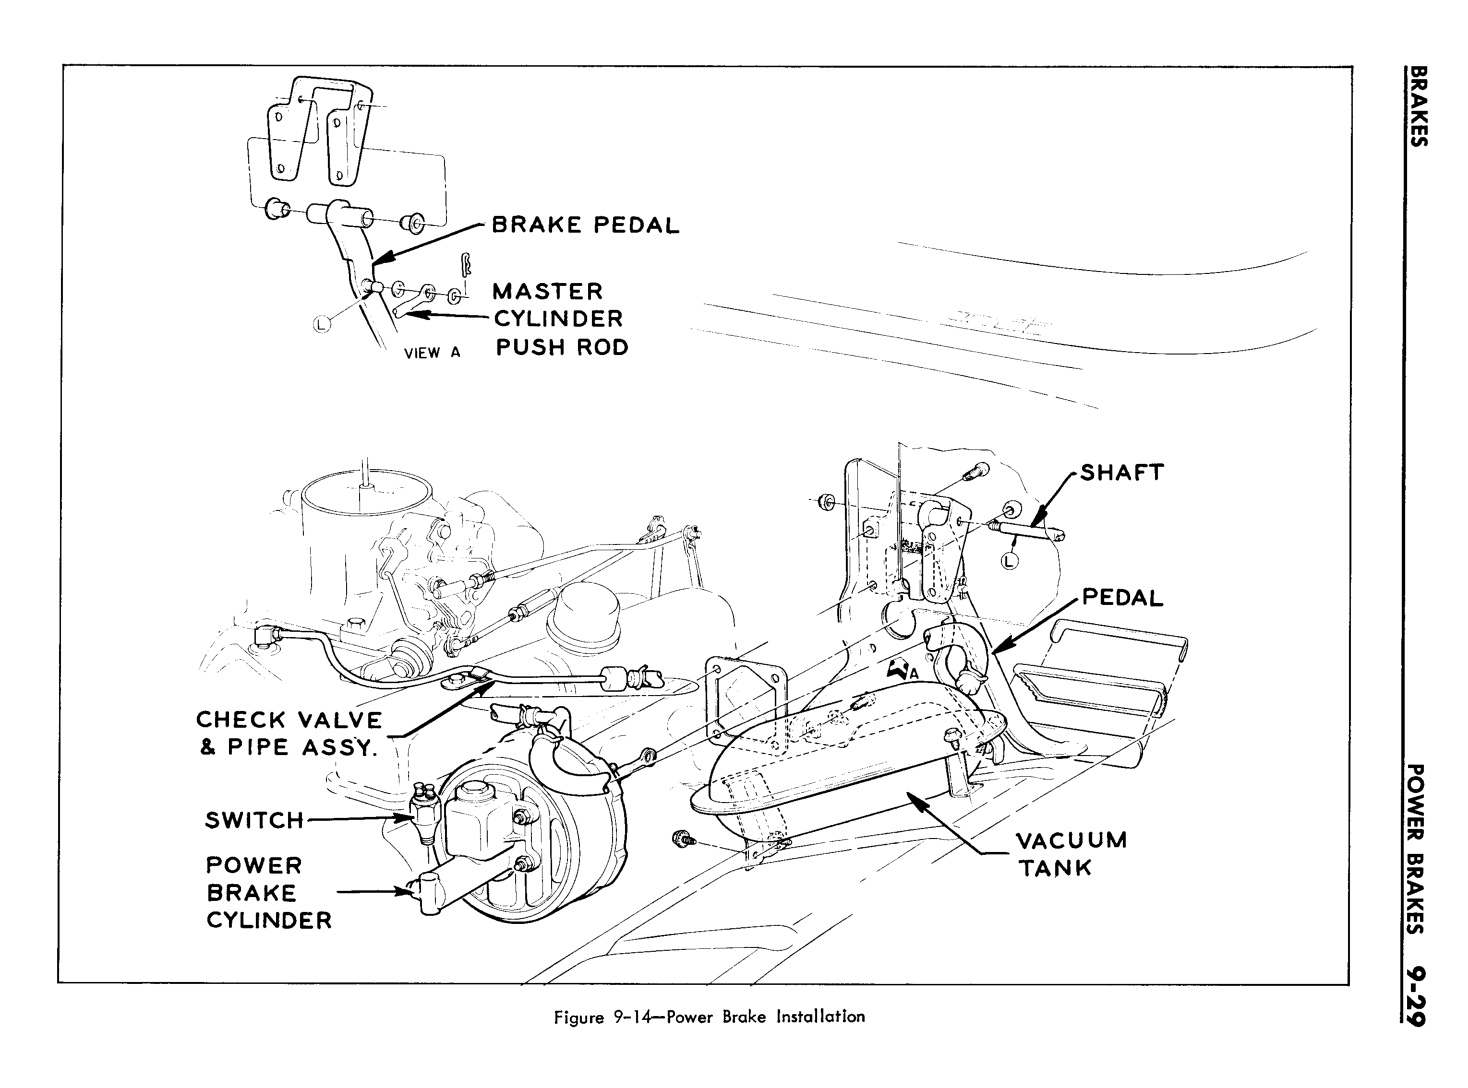 n_09 1961 Buick Shop Manual - Brakes-029-029.jpg